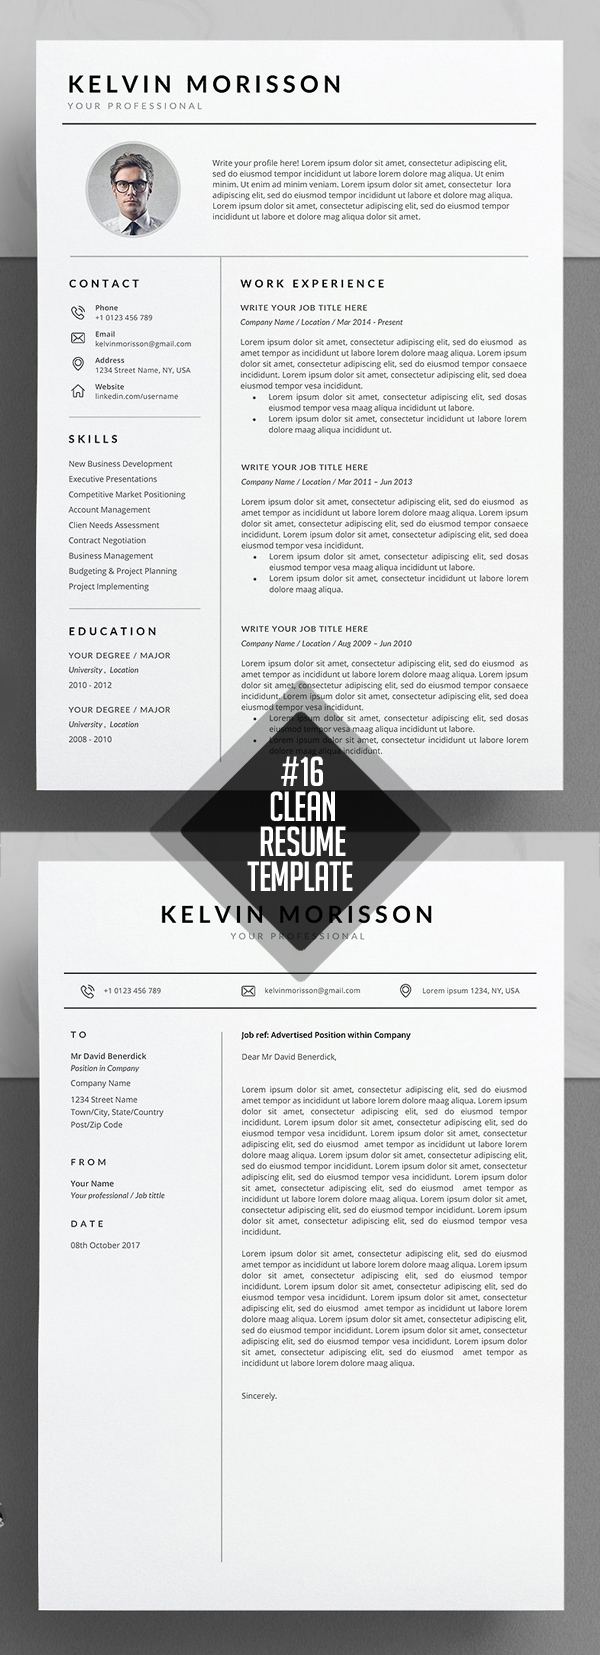 Simple Resume / CV